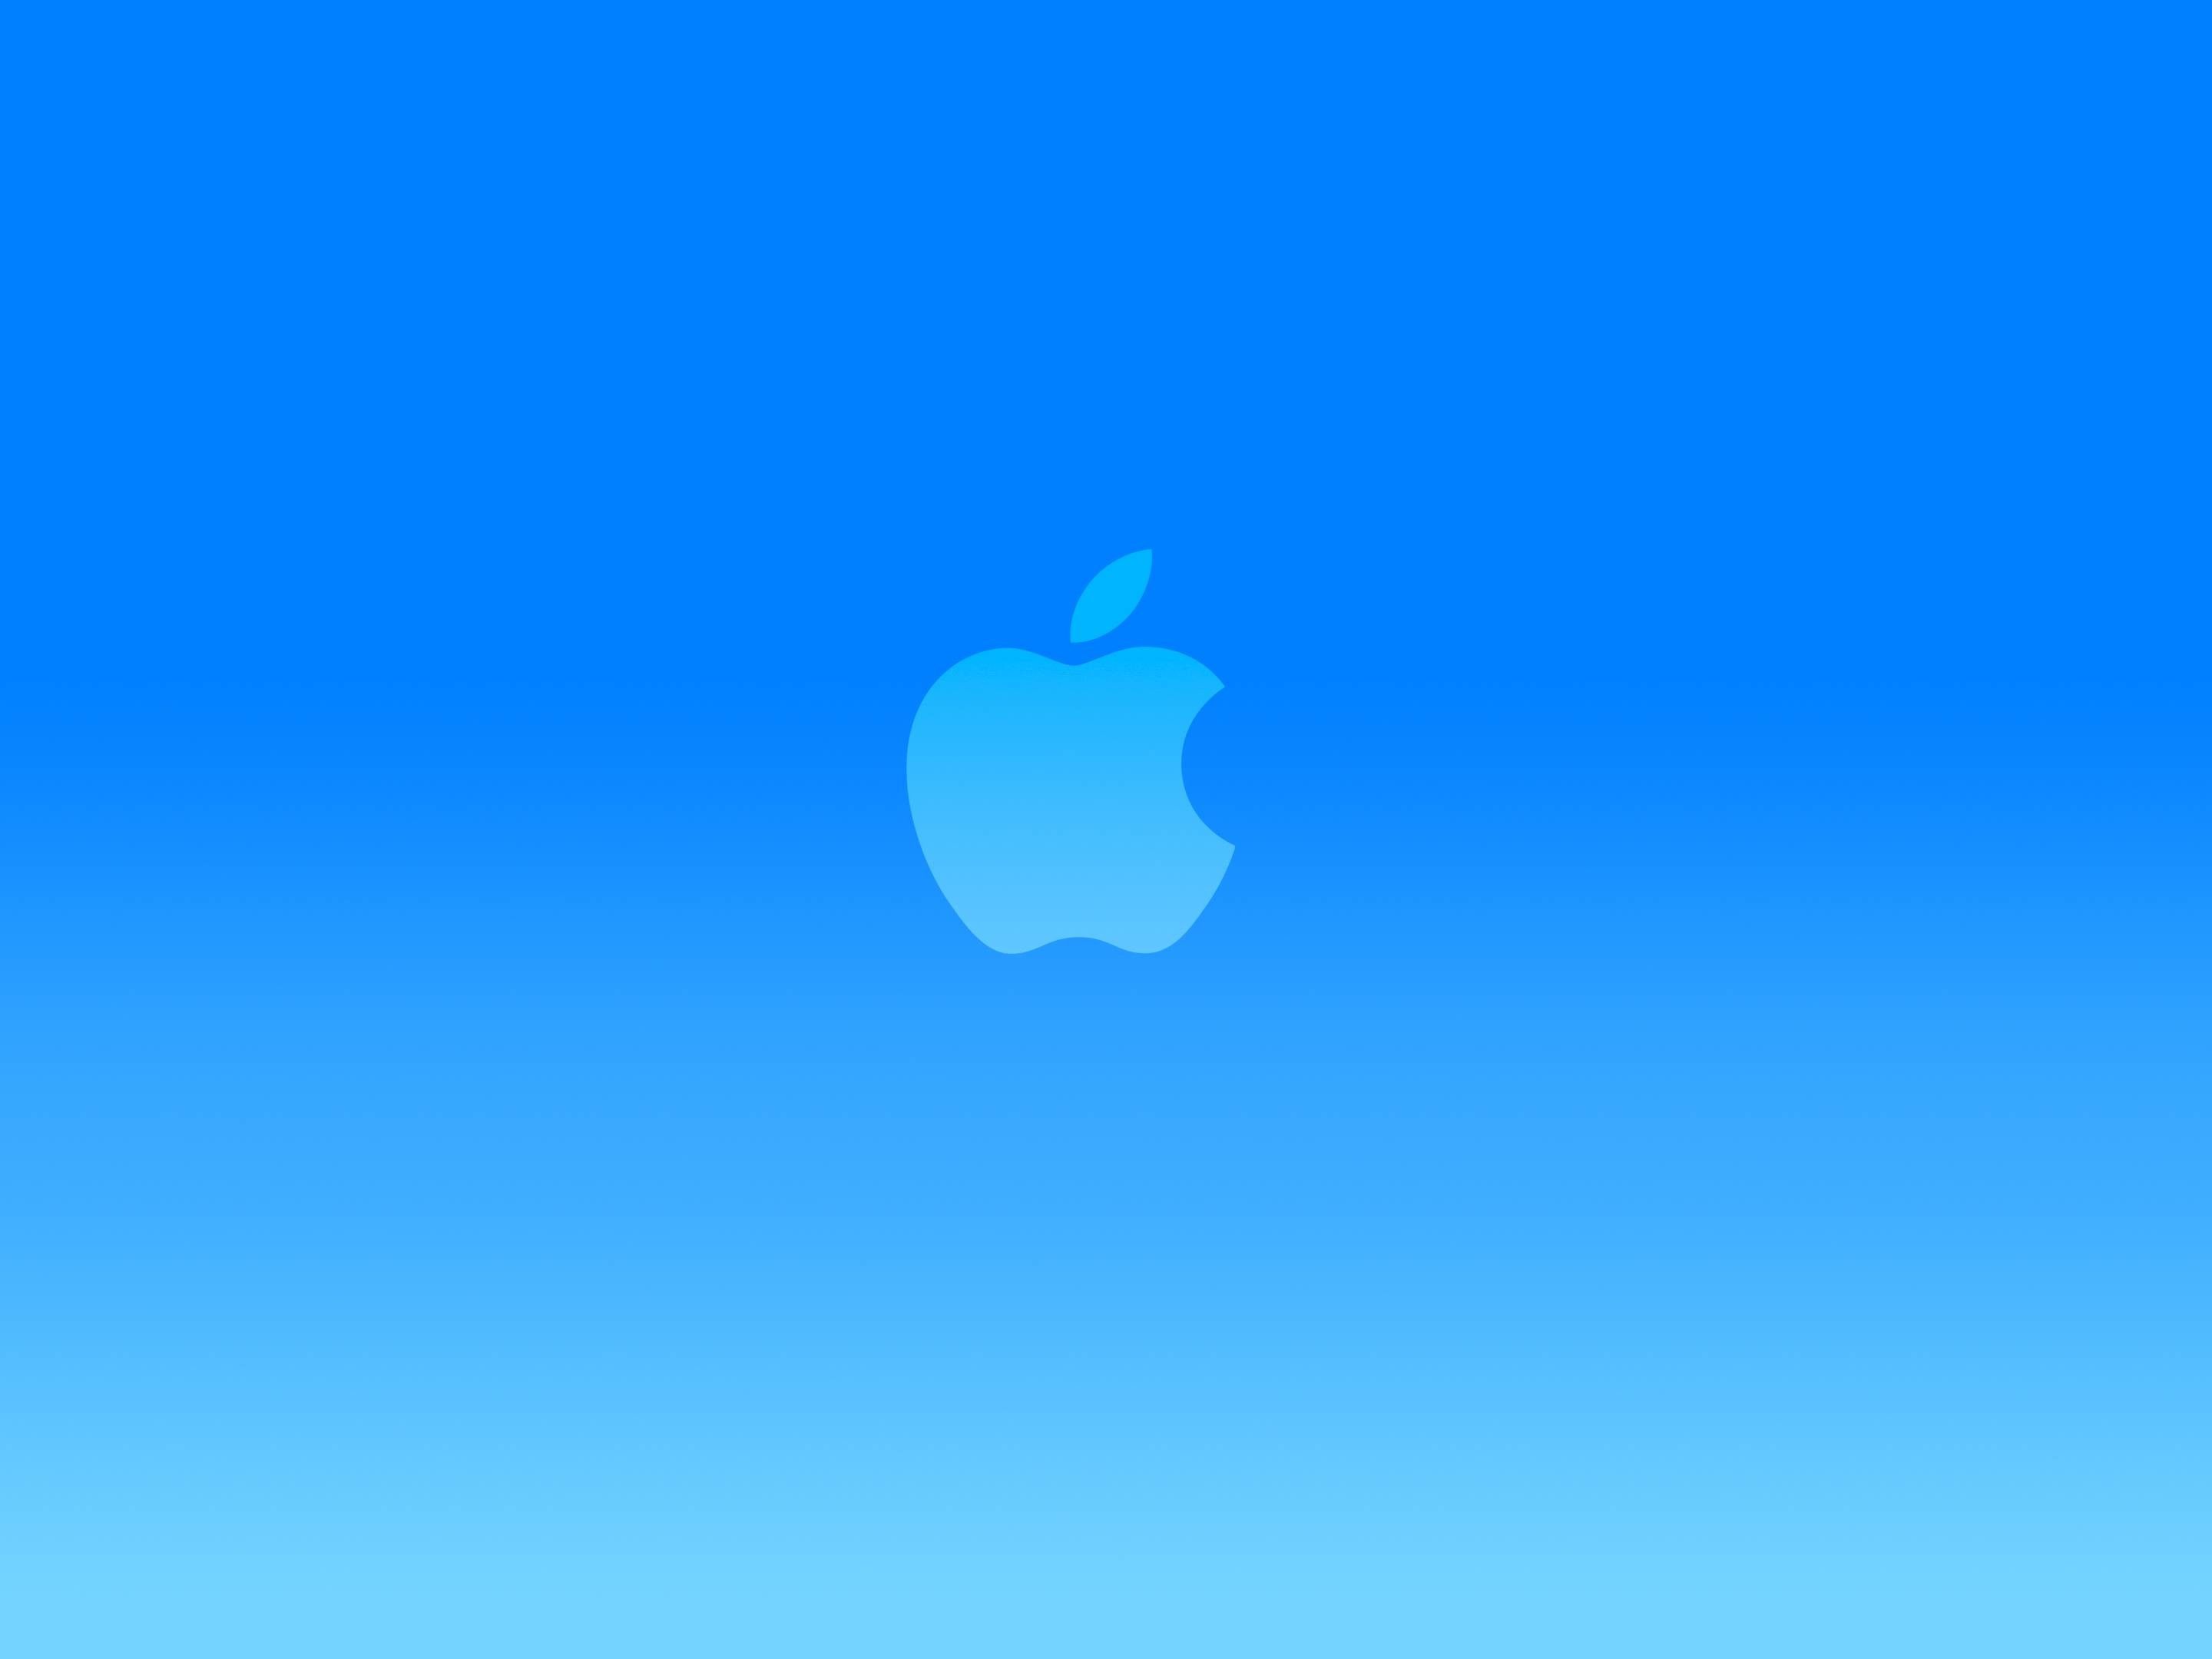 blue apple logo